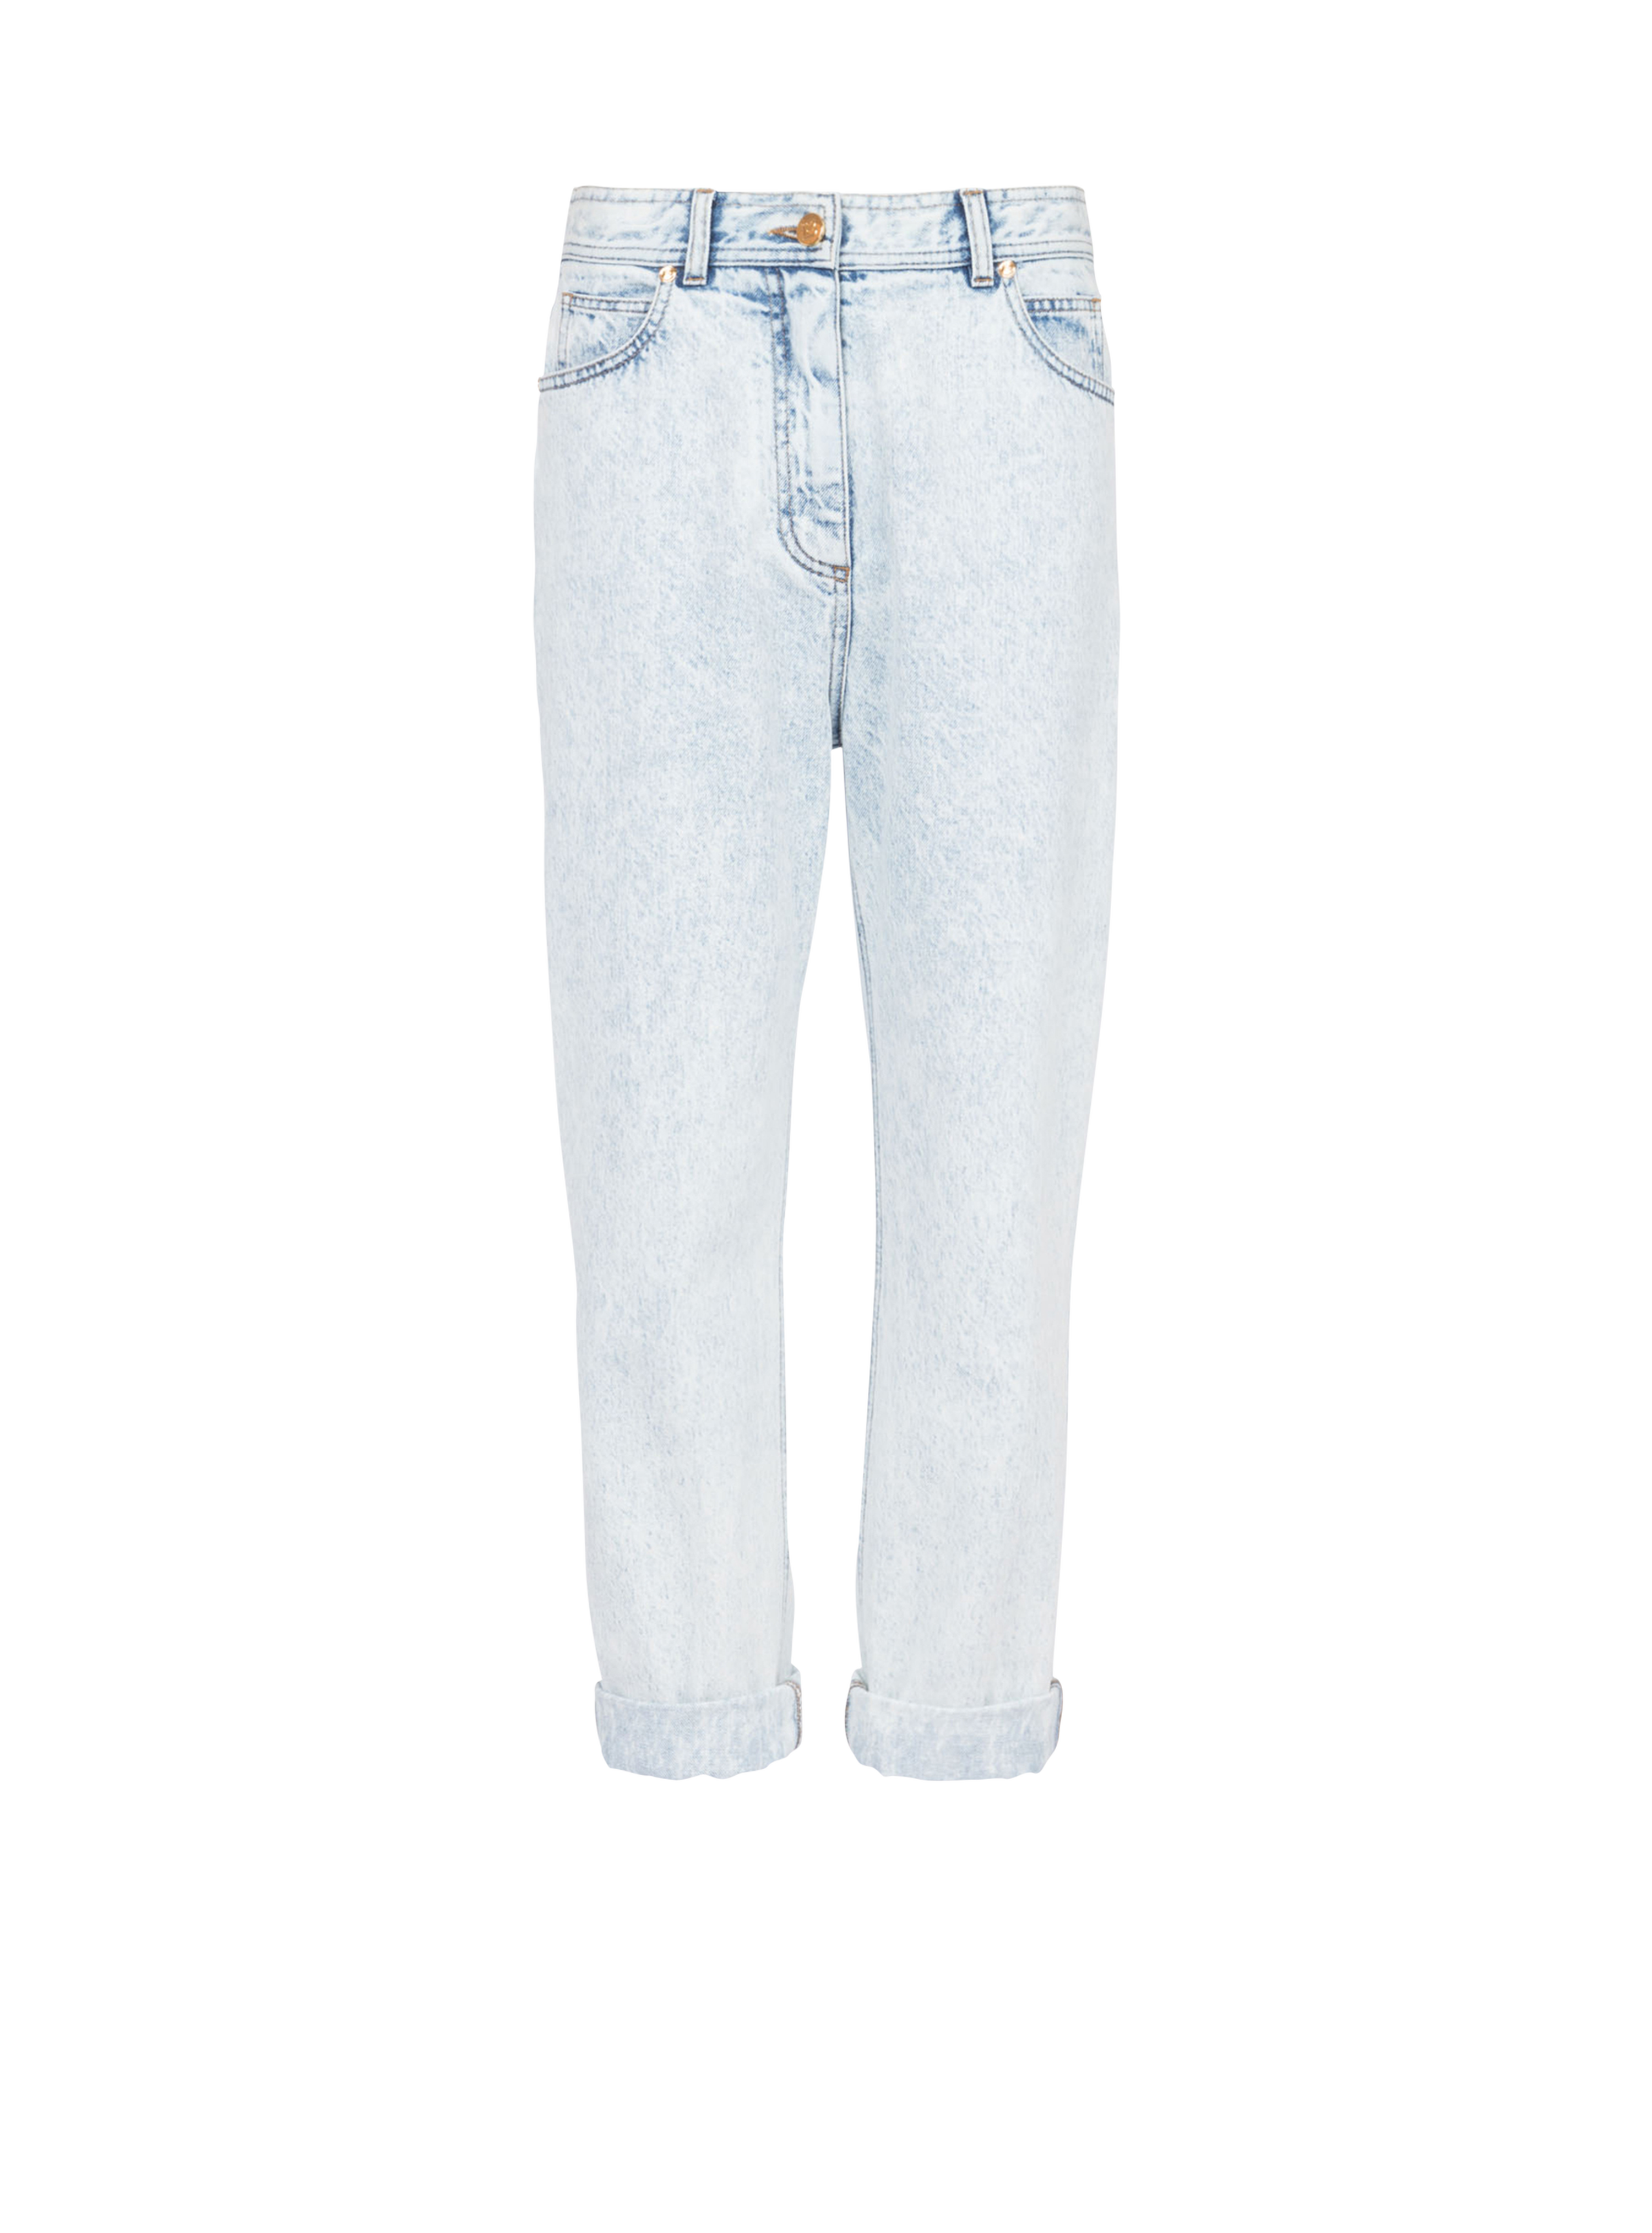 COLECCIÓN CÁPSULA DE VERANO - Jeans de algodón tipo boyfriend, azul